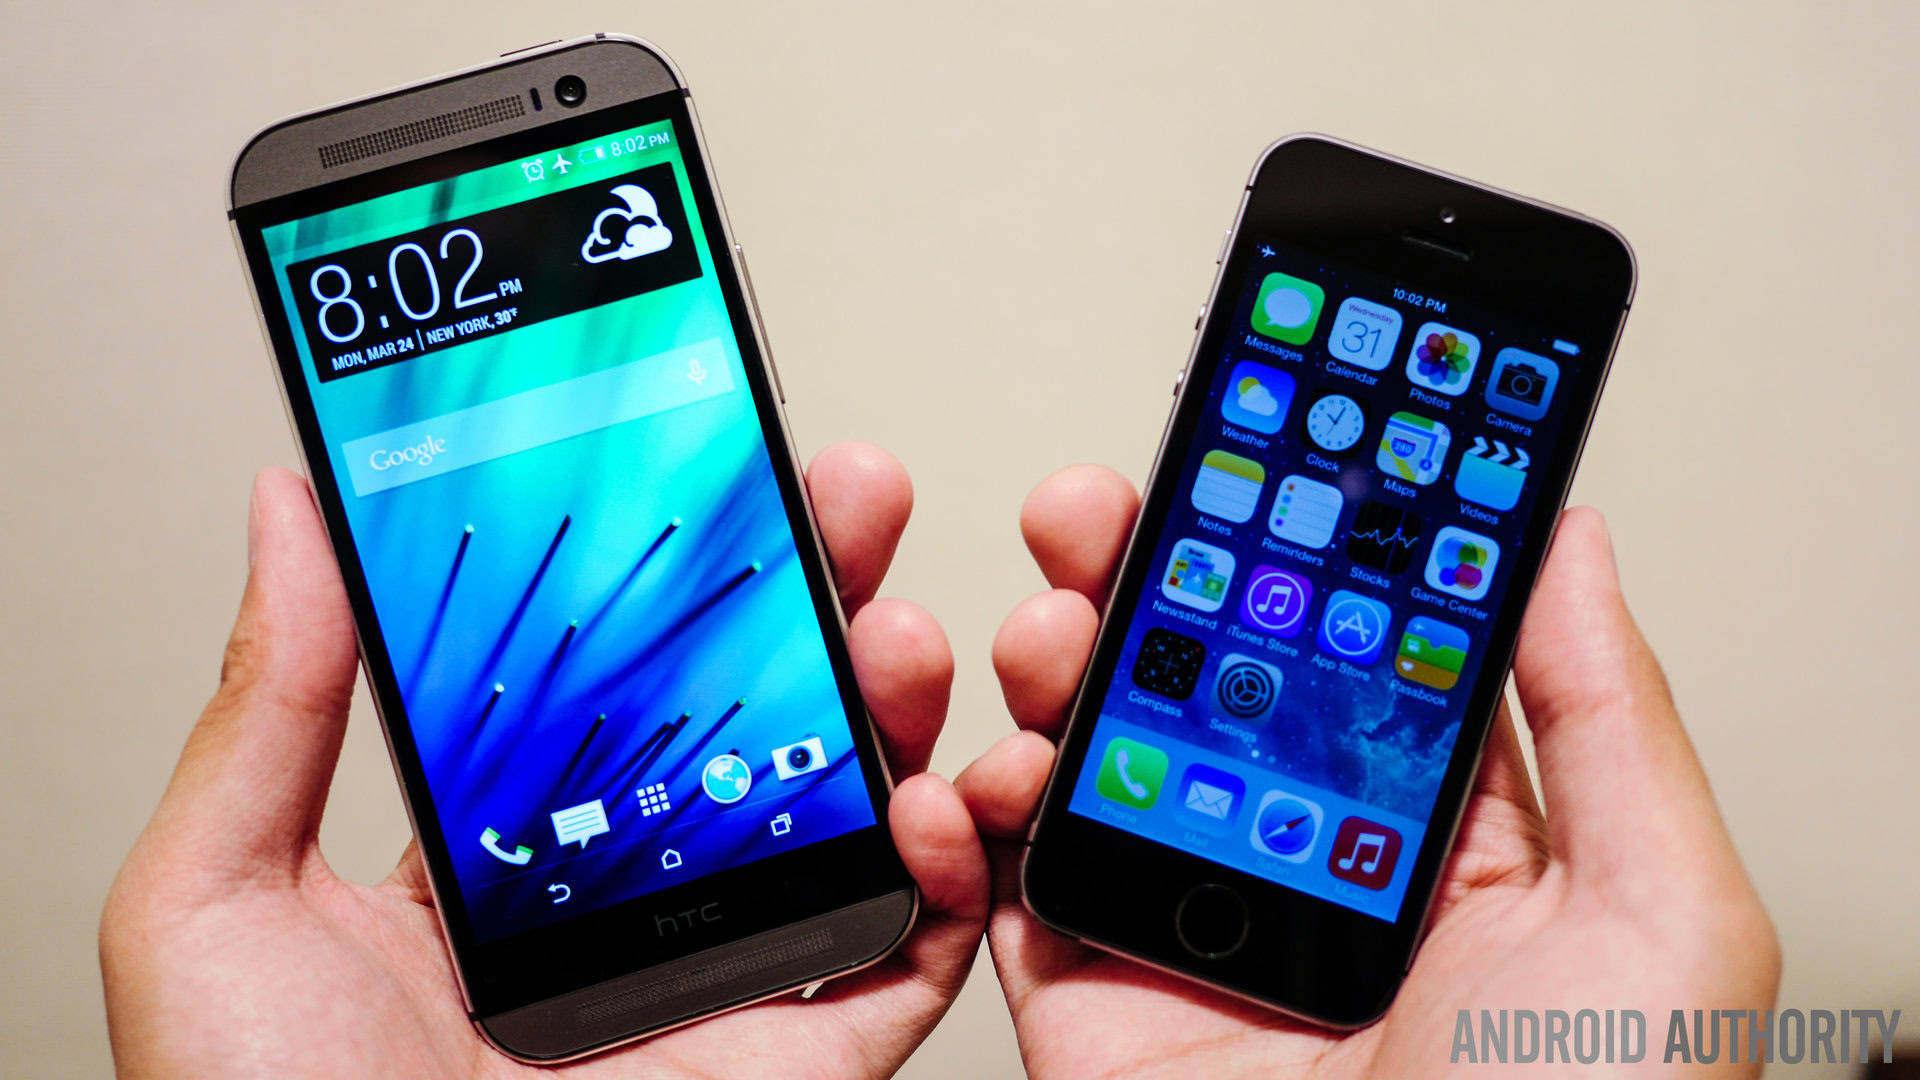 htc one m8 vs iphone 5s quick look aa handheld (5 of 6)